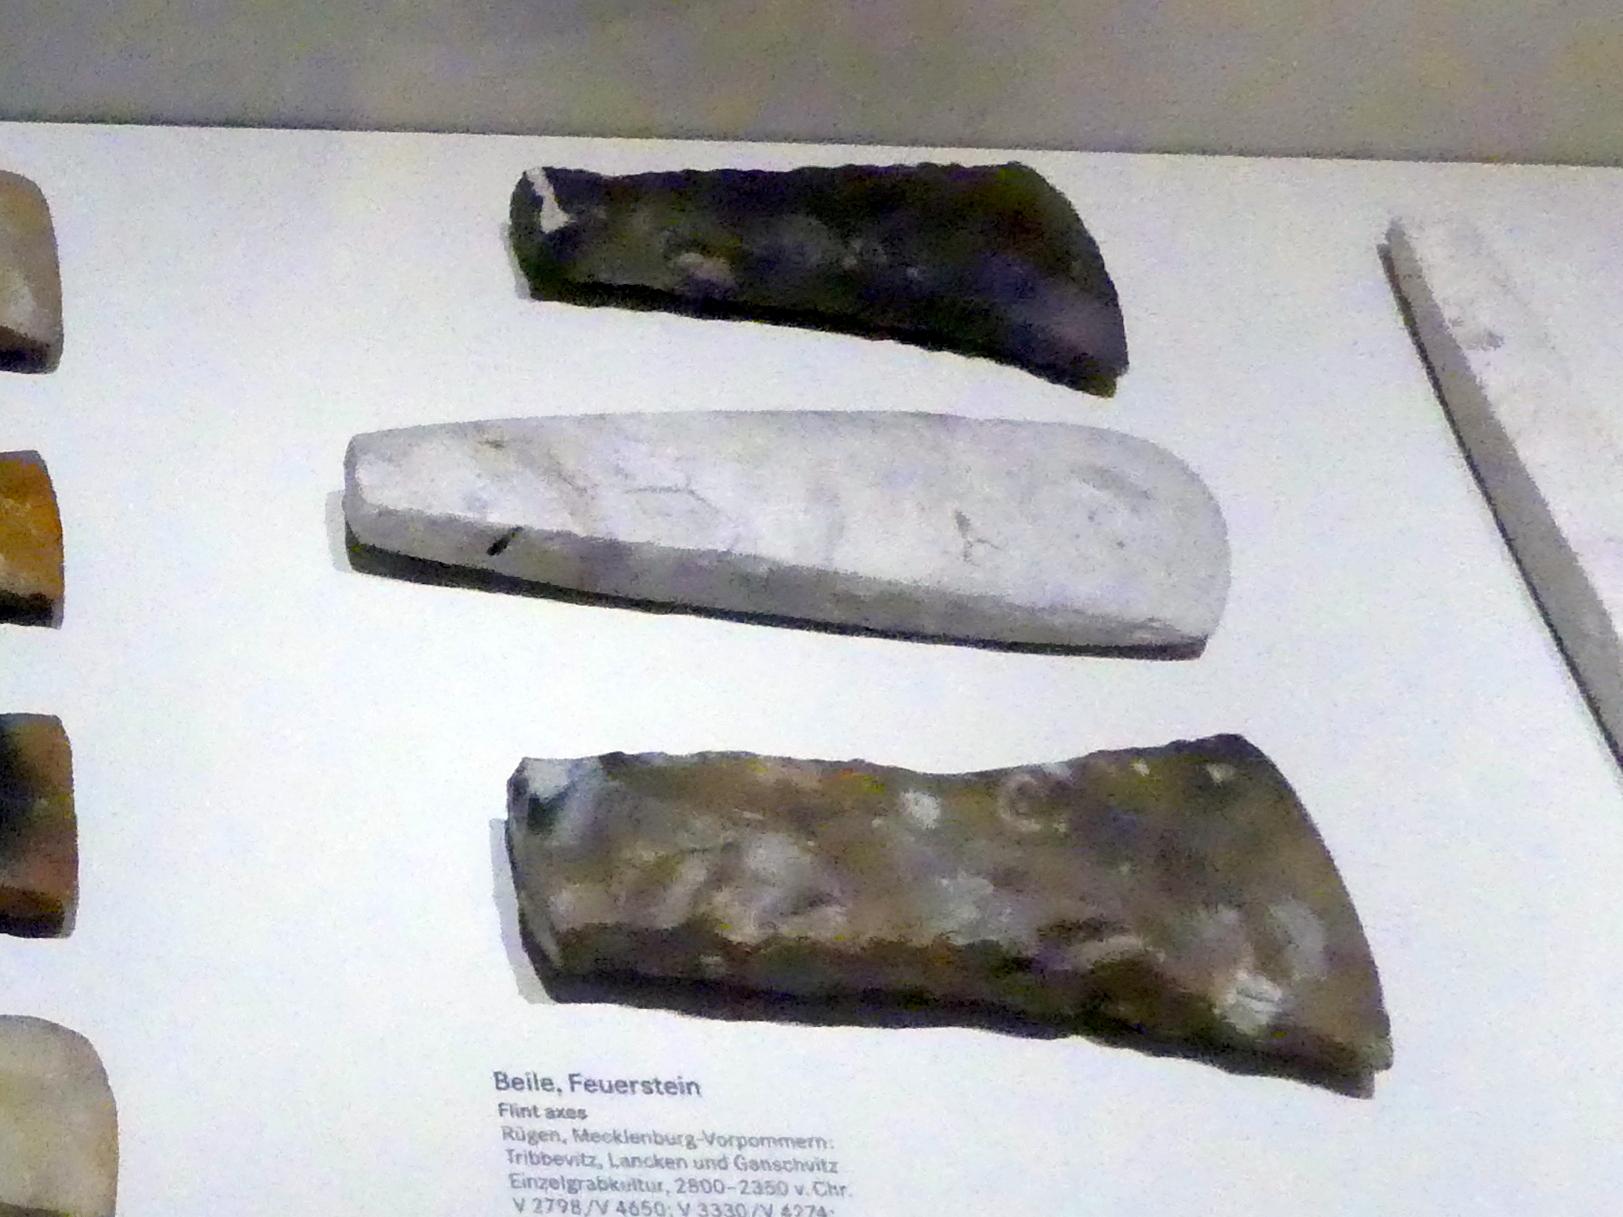 Beil, Nordisches Neolithikum, 4400 - 2350 v. Chr., 2800 - 2350 v. Chr., Bild 1/2